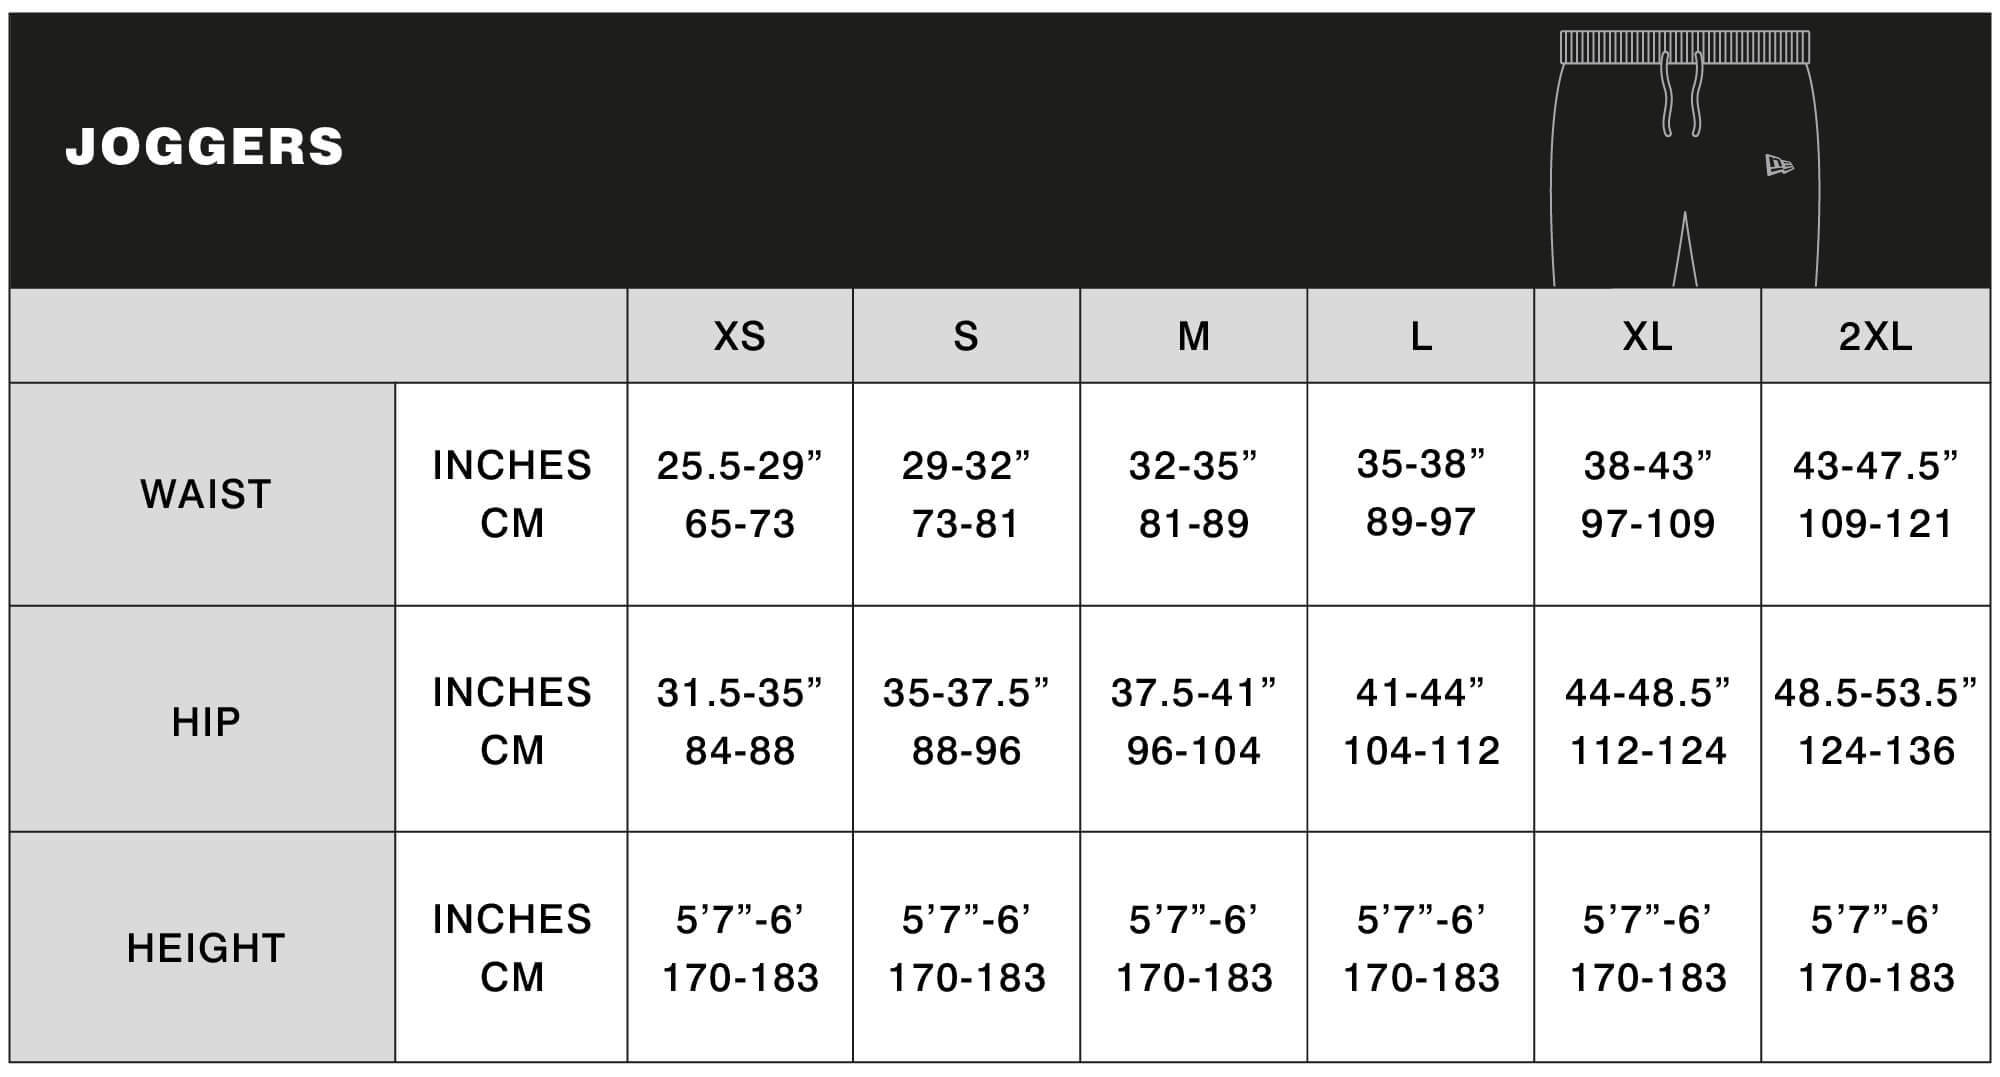 men's joggers size guide table for desktop